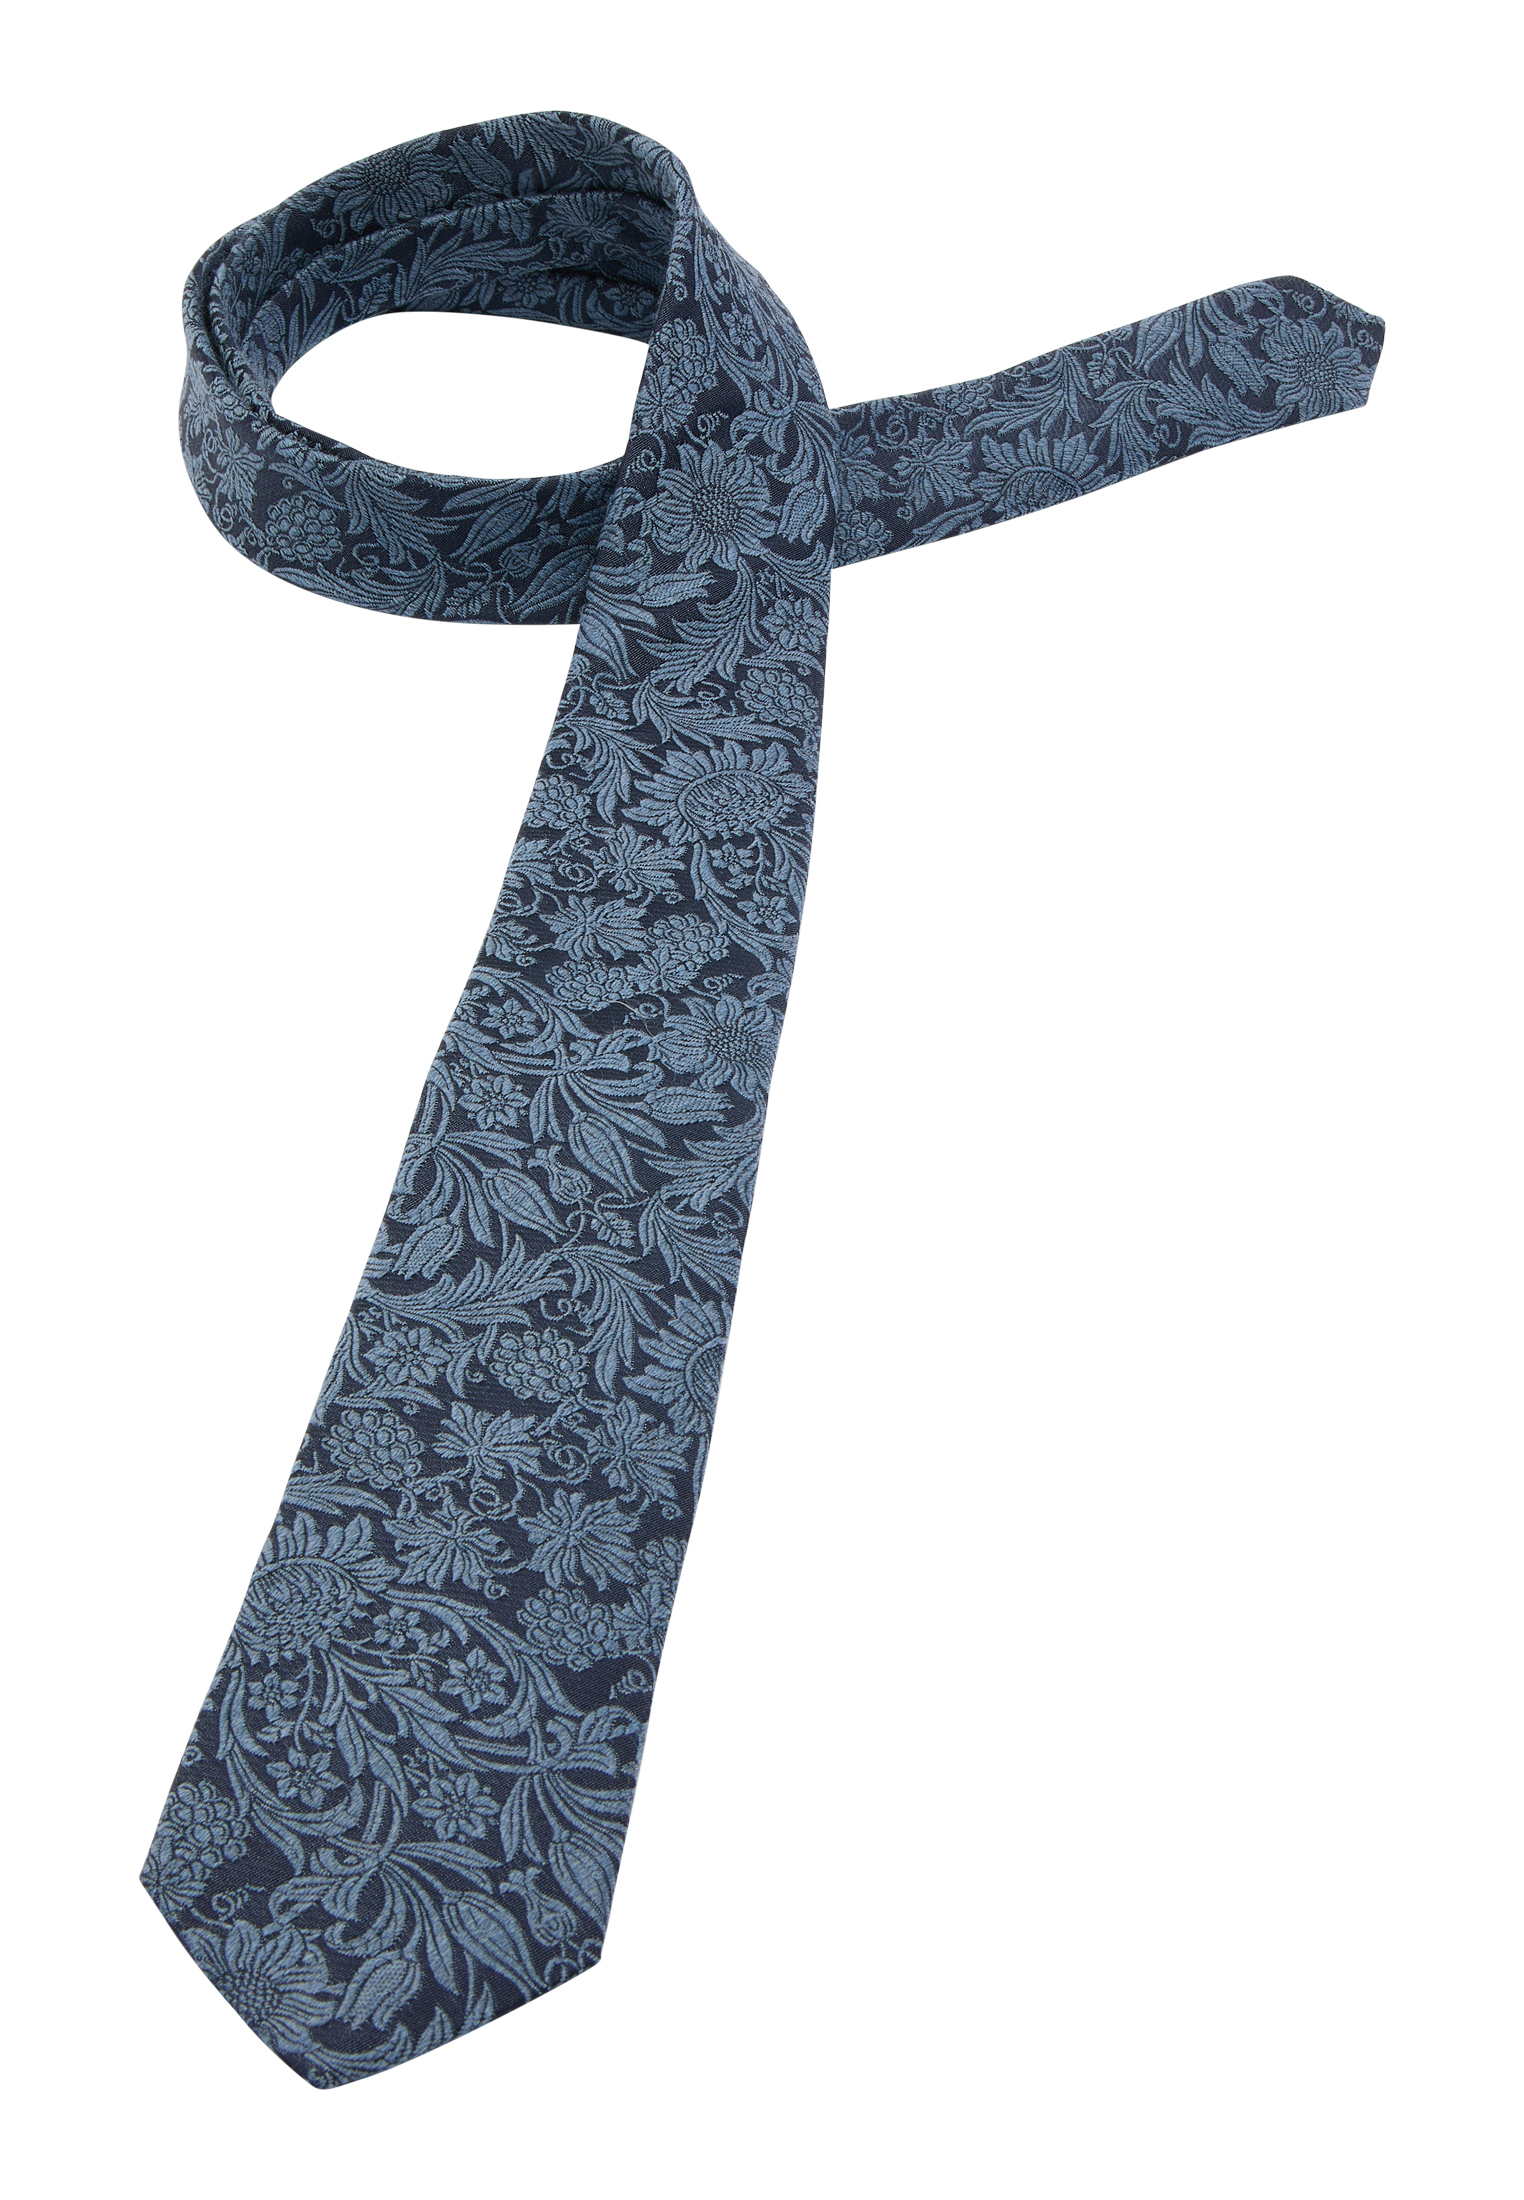 Krawatte in | dunkelblau dunkelblau | | 1AC01901-01-81-142 gemustert 142